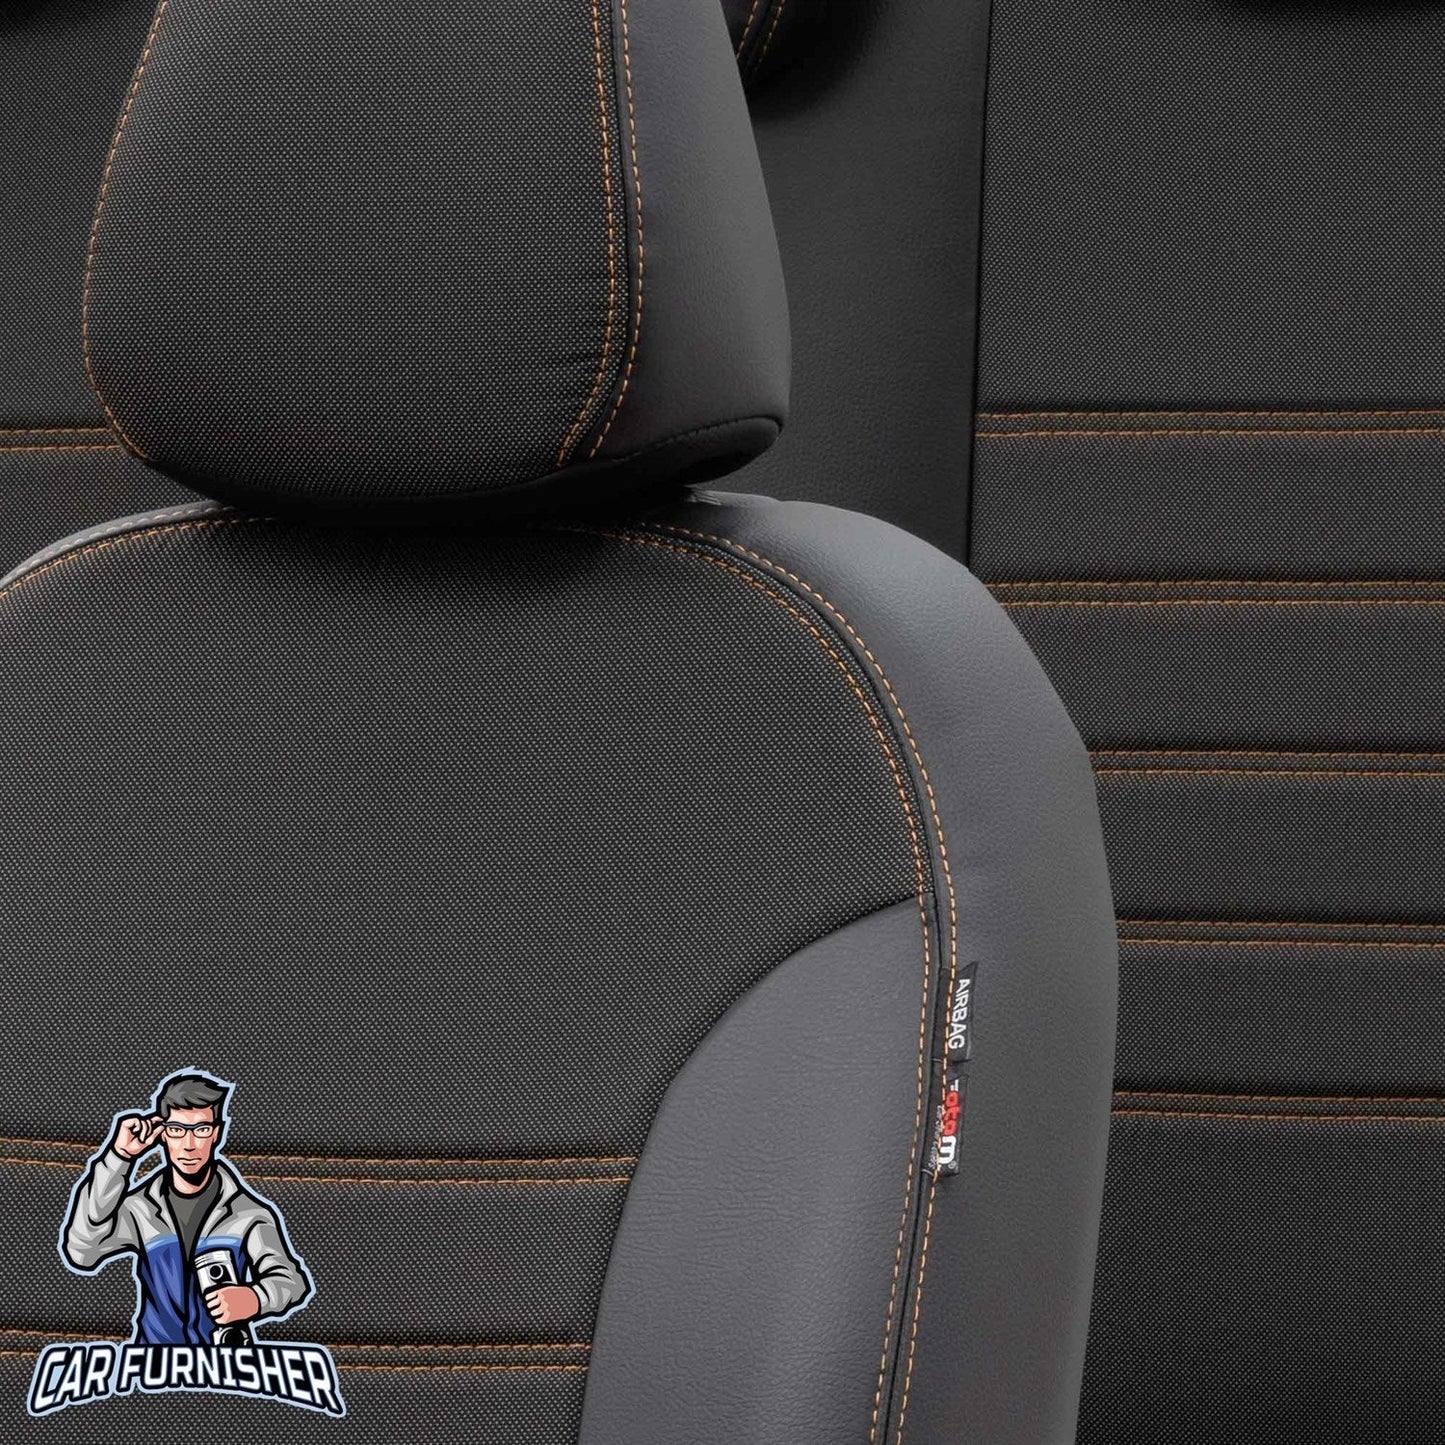 Ford Ranger Seat Covers Paris Leather & Jacquard Design Dark Beige Leather & Jacquard Fabric